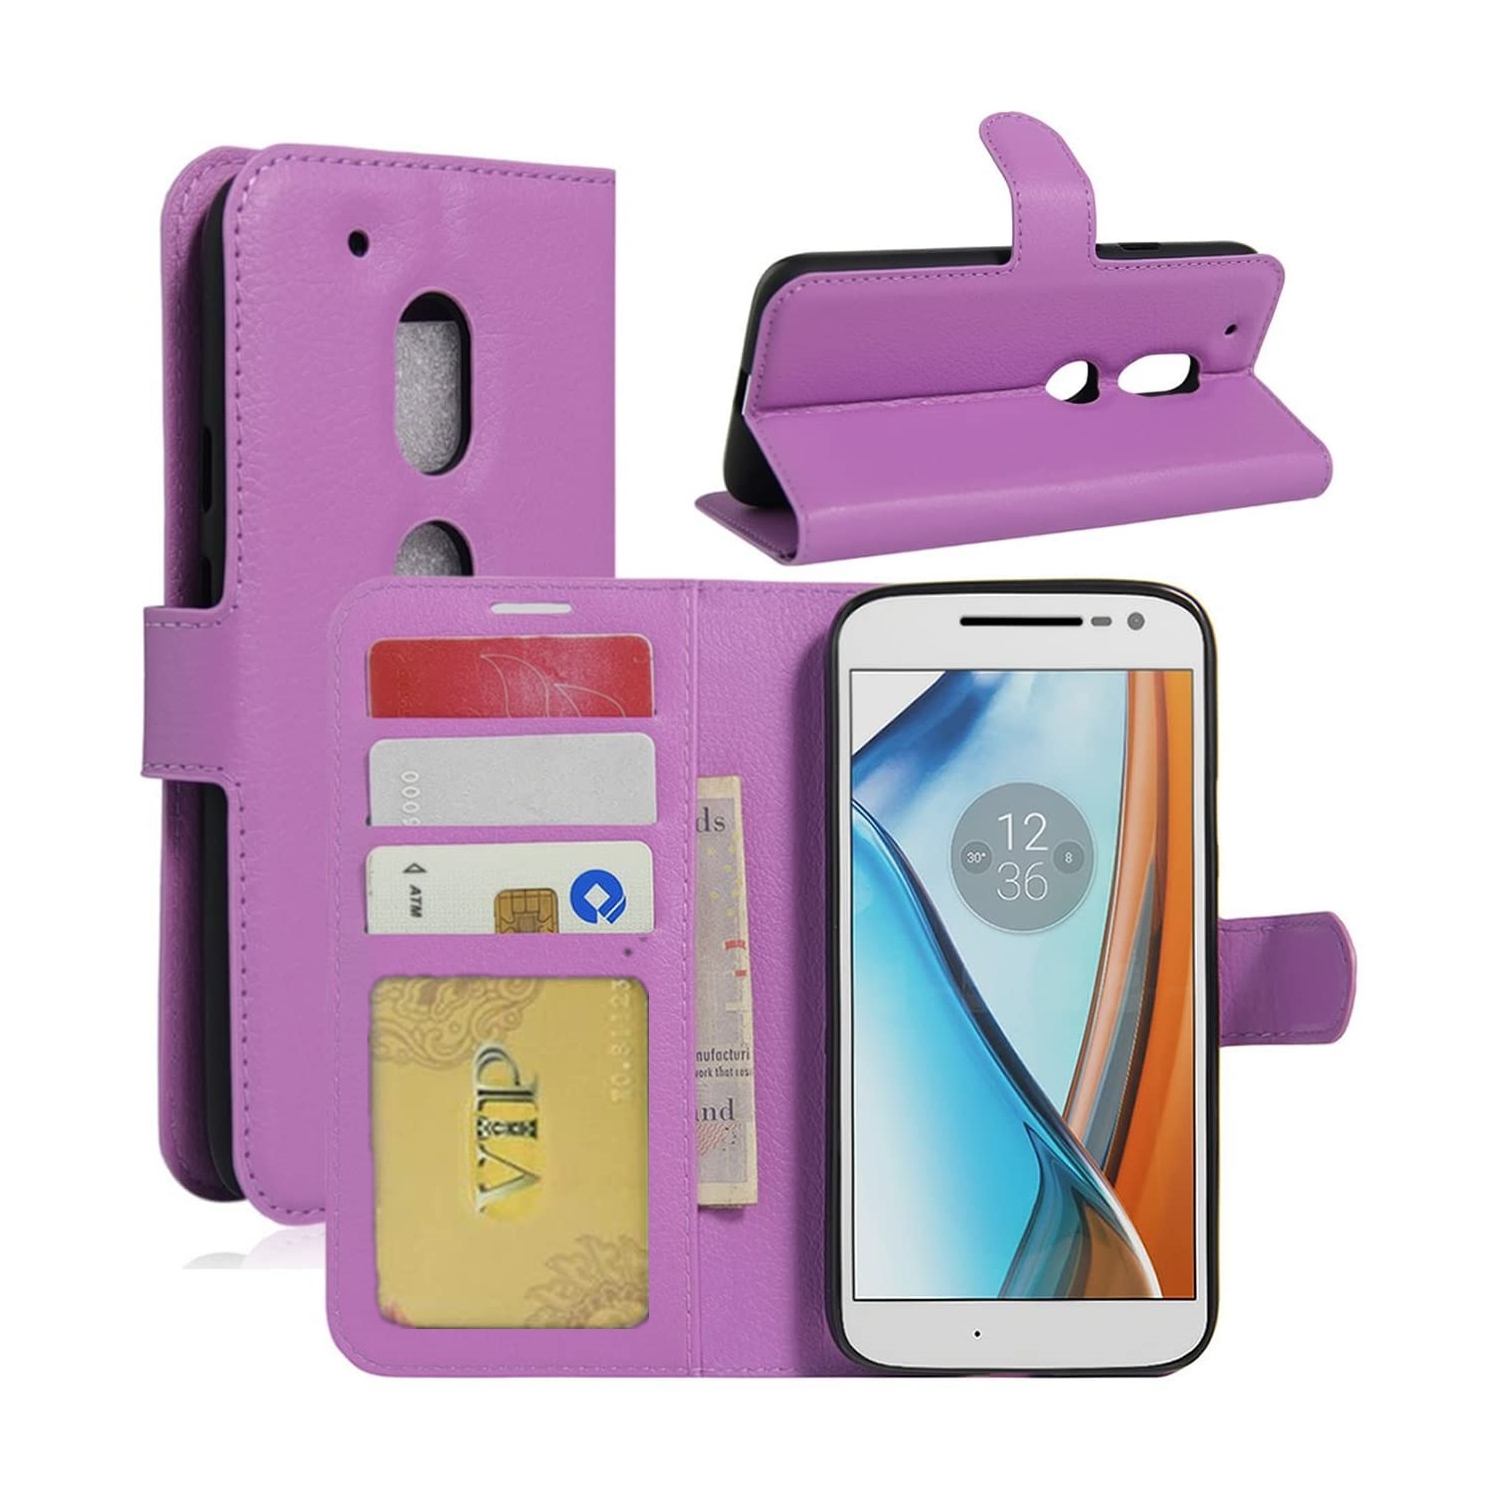 【CSmart】 Magnetic Card Slot Leather Folio Wallet Flip Case Cover for Motorola Moto G6 Play, Purple